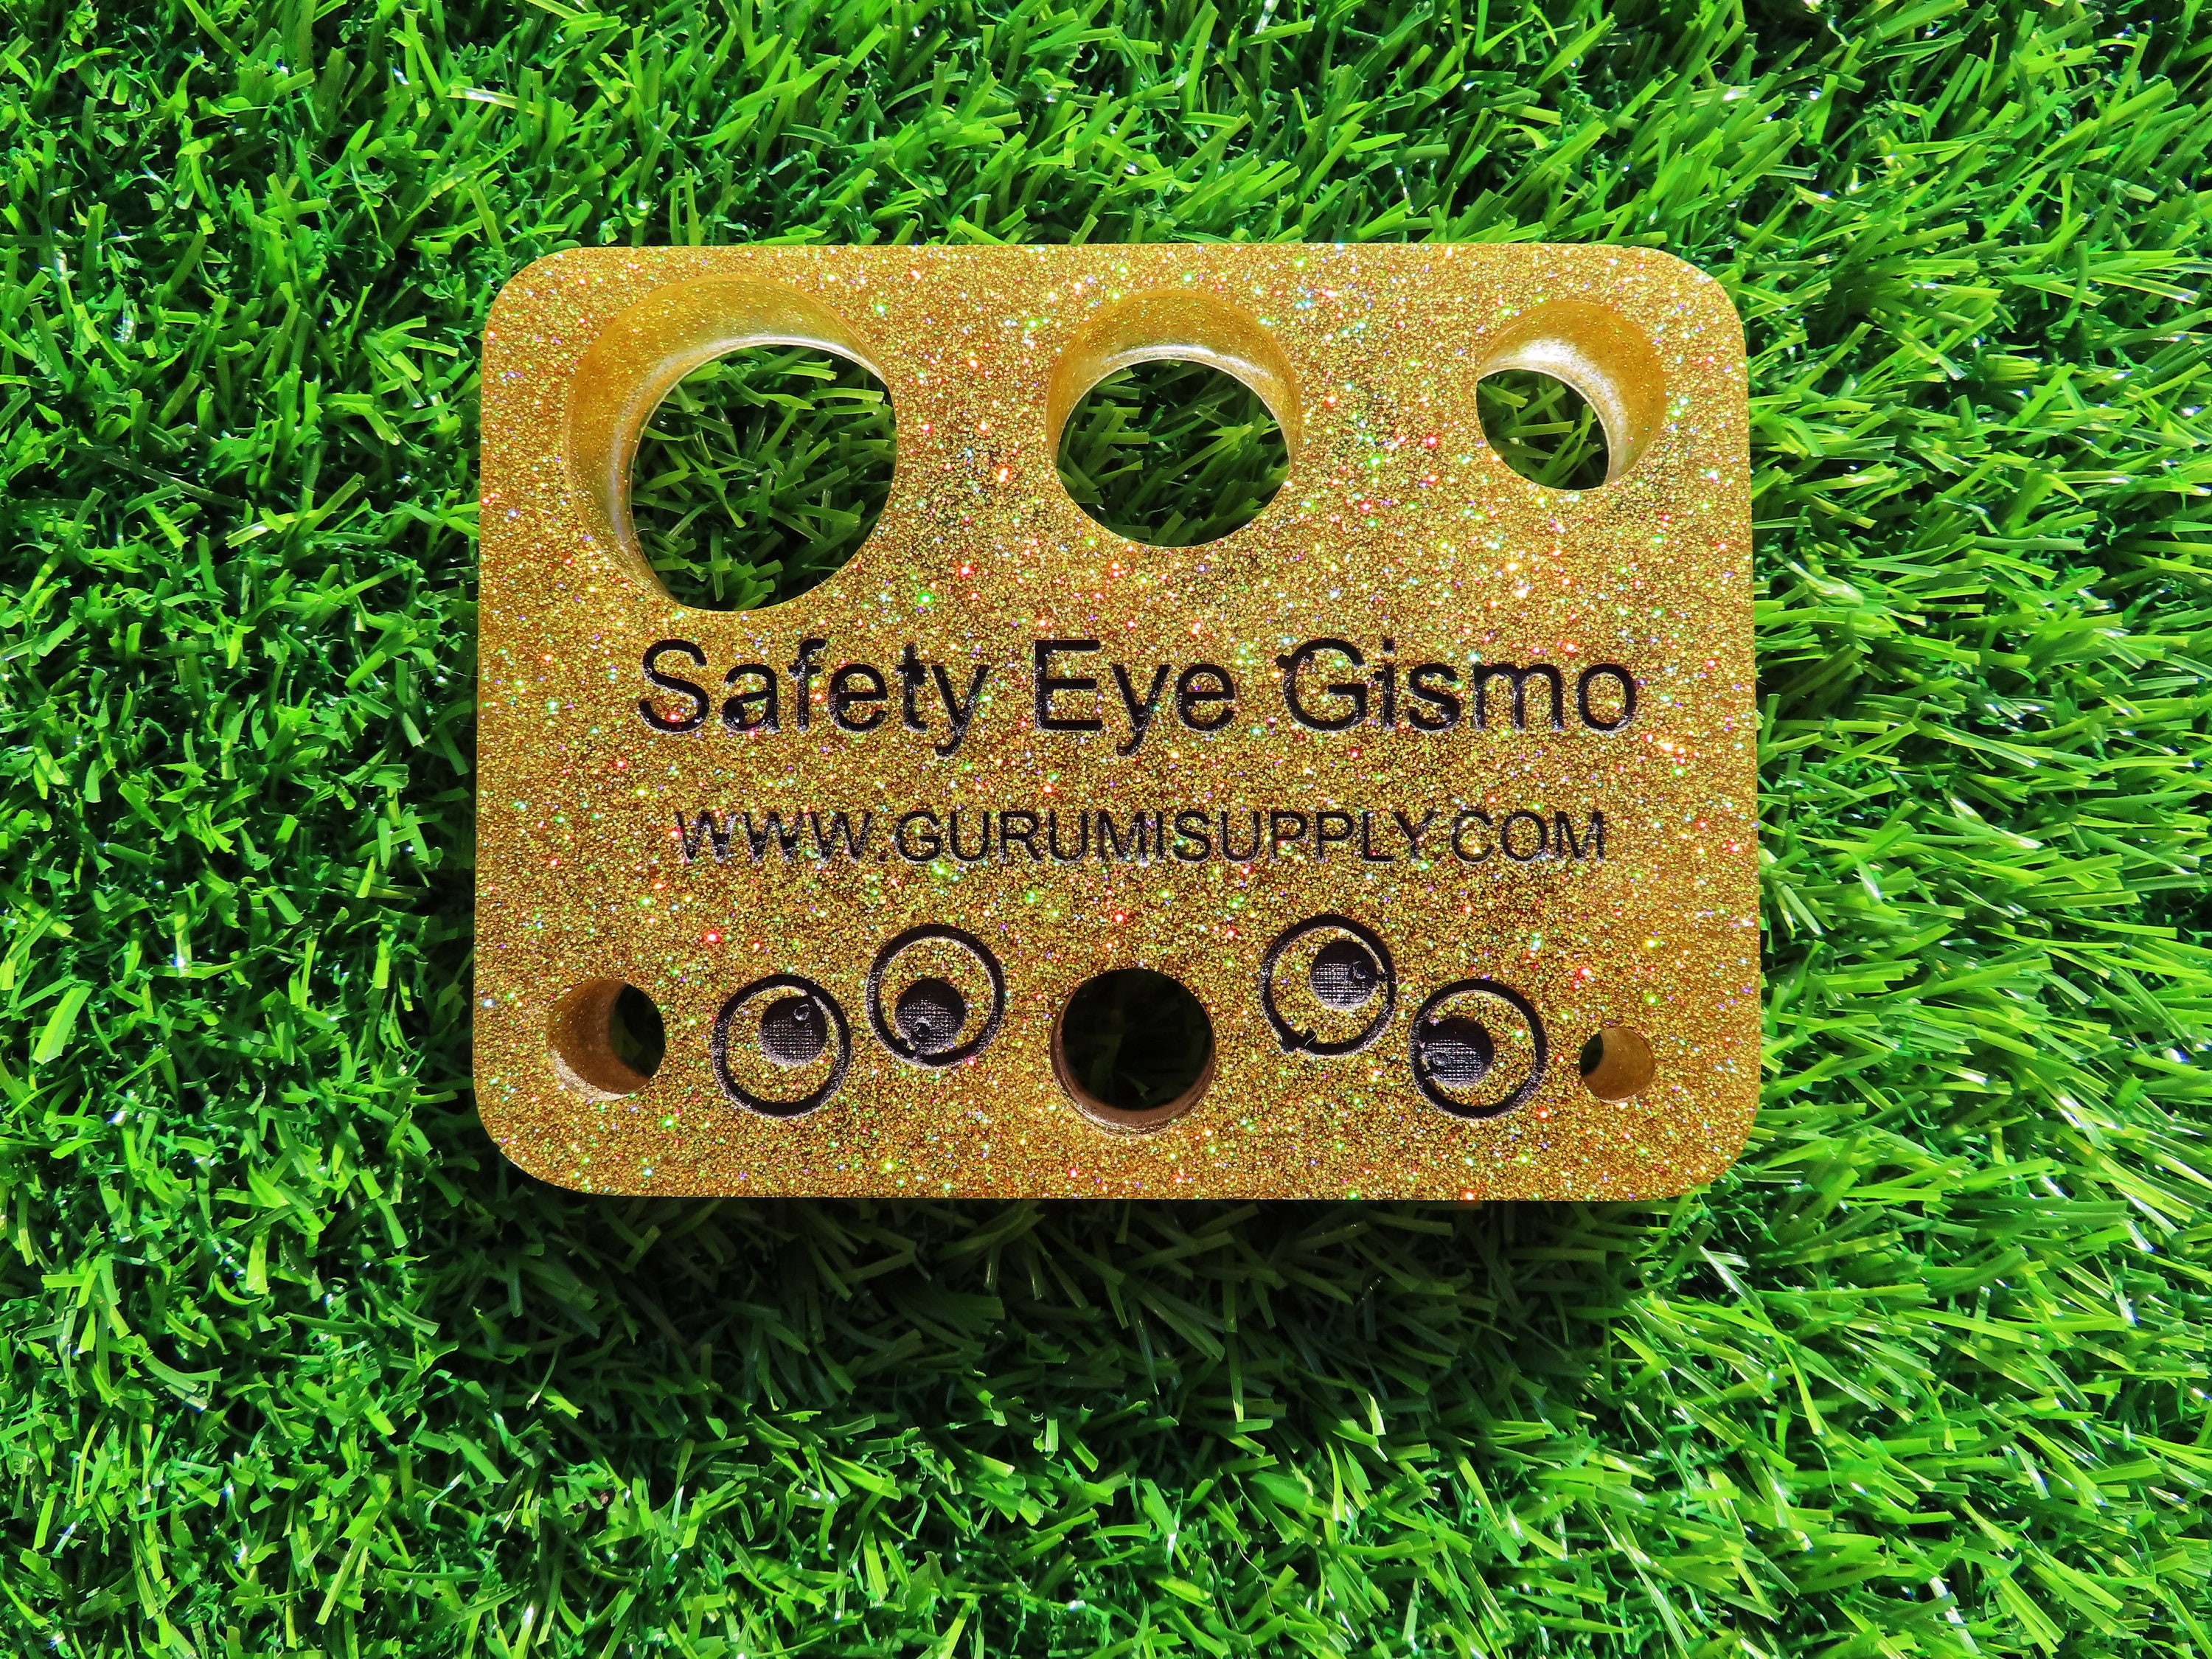 Safety Eye Gismo Purple Grape with Glitter - Keychain - Safety Eye Tool -  Safety Eye Jig - Safety Eye Helper - Amigurumi - Travel Size